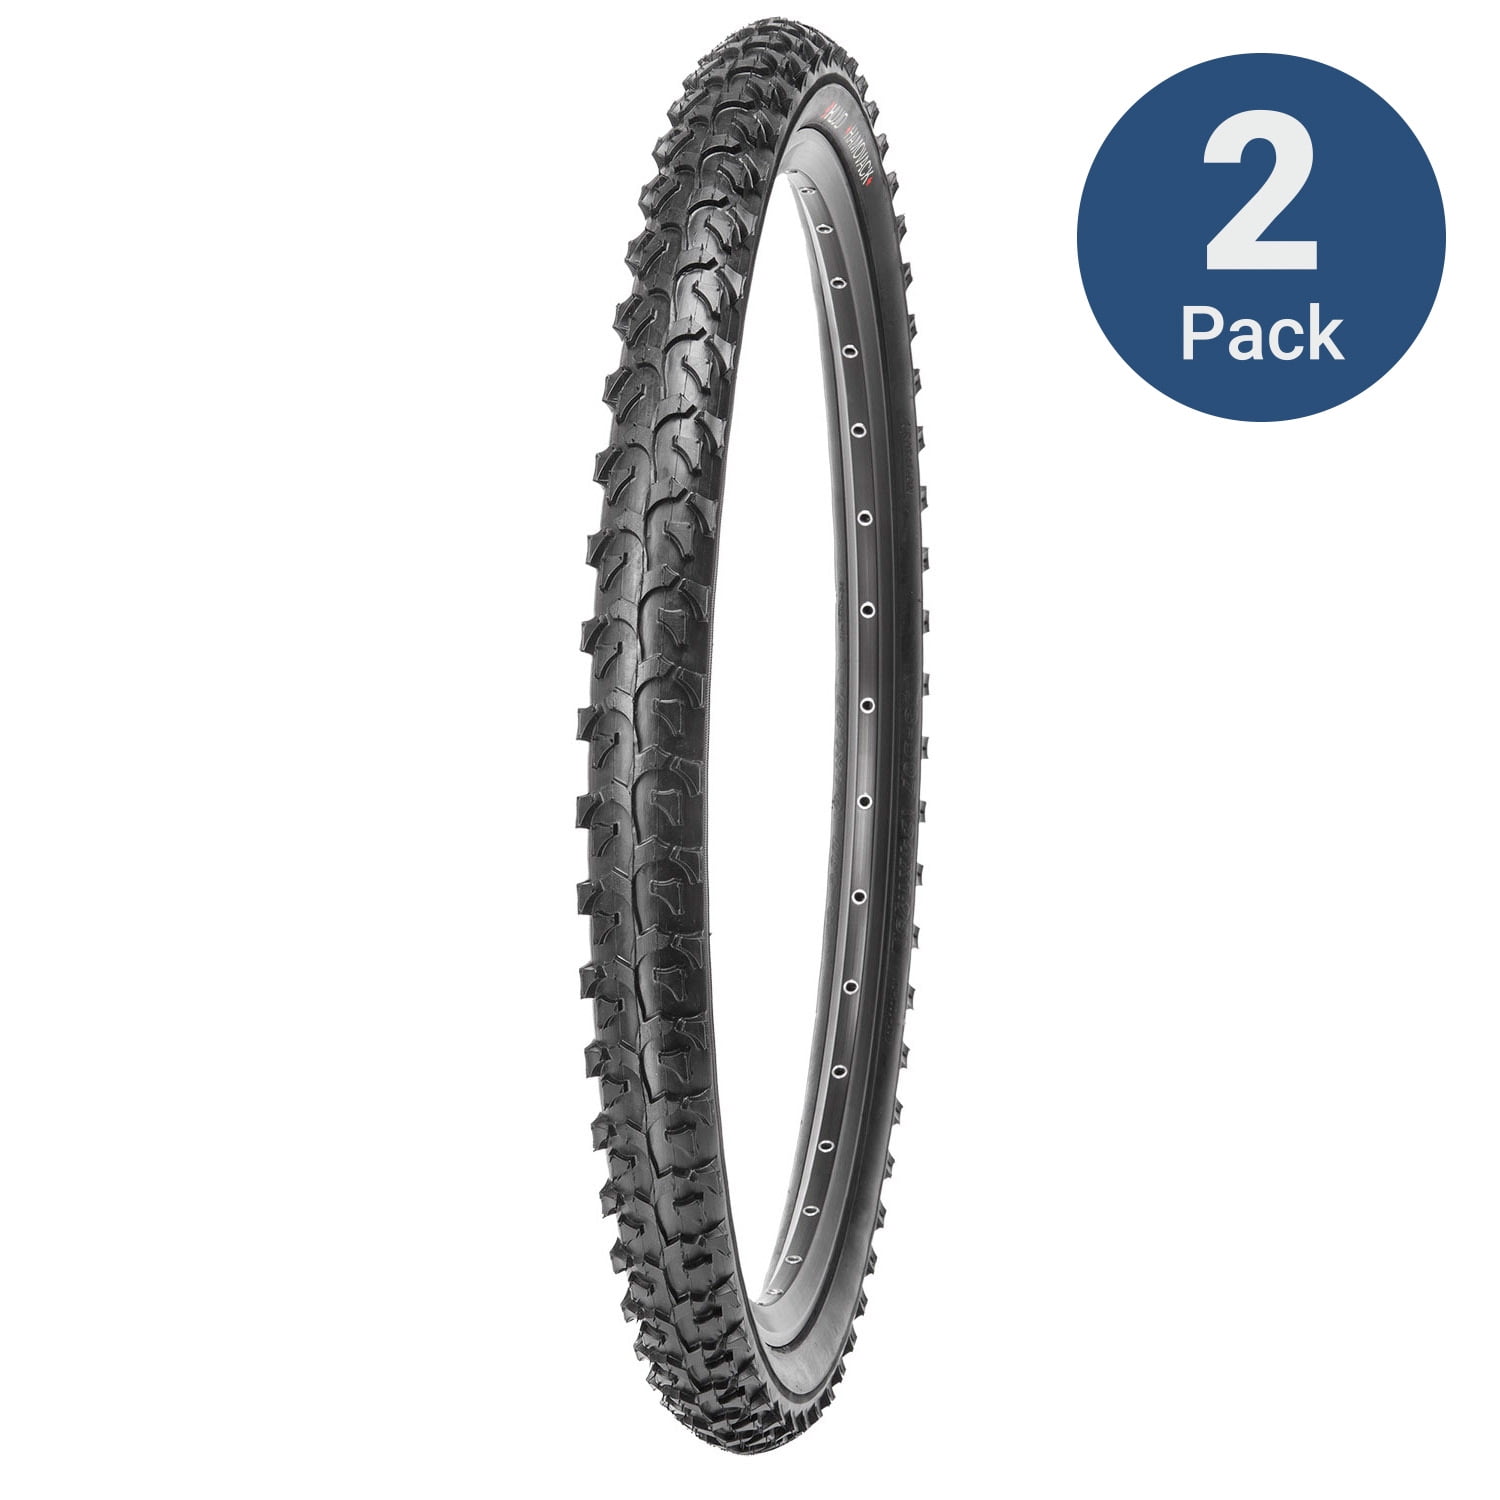 hypothese Psychologisch Matroos Hamovack 26 x 1.95 MTB Wire Bead Tire (2 pack) - Walmart.com